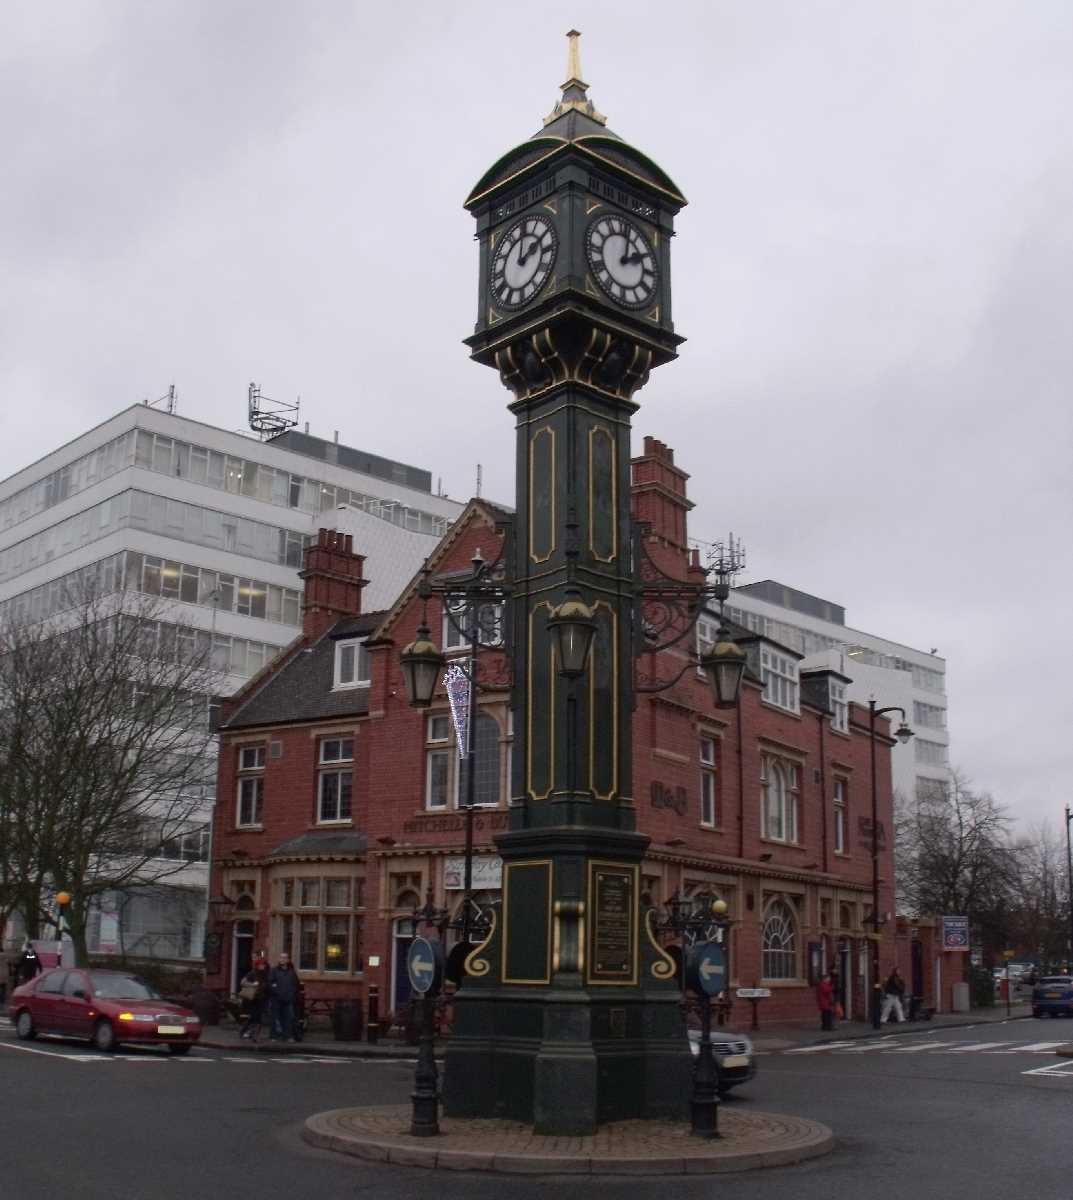 Chamberlain Memorial Clock Jewellery Quarter (November 2009)